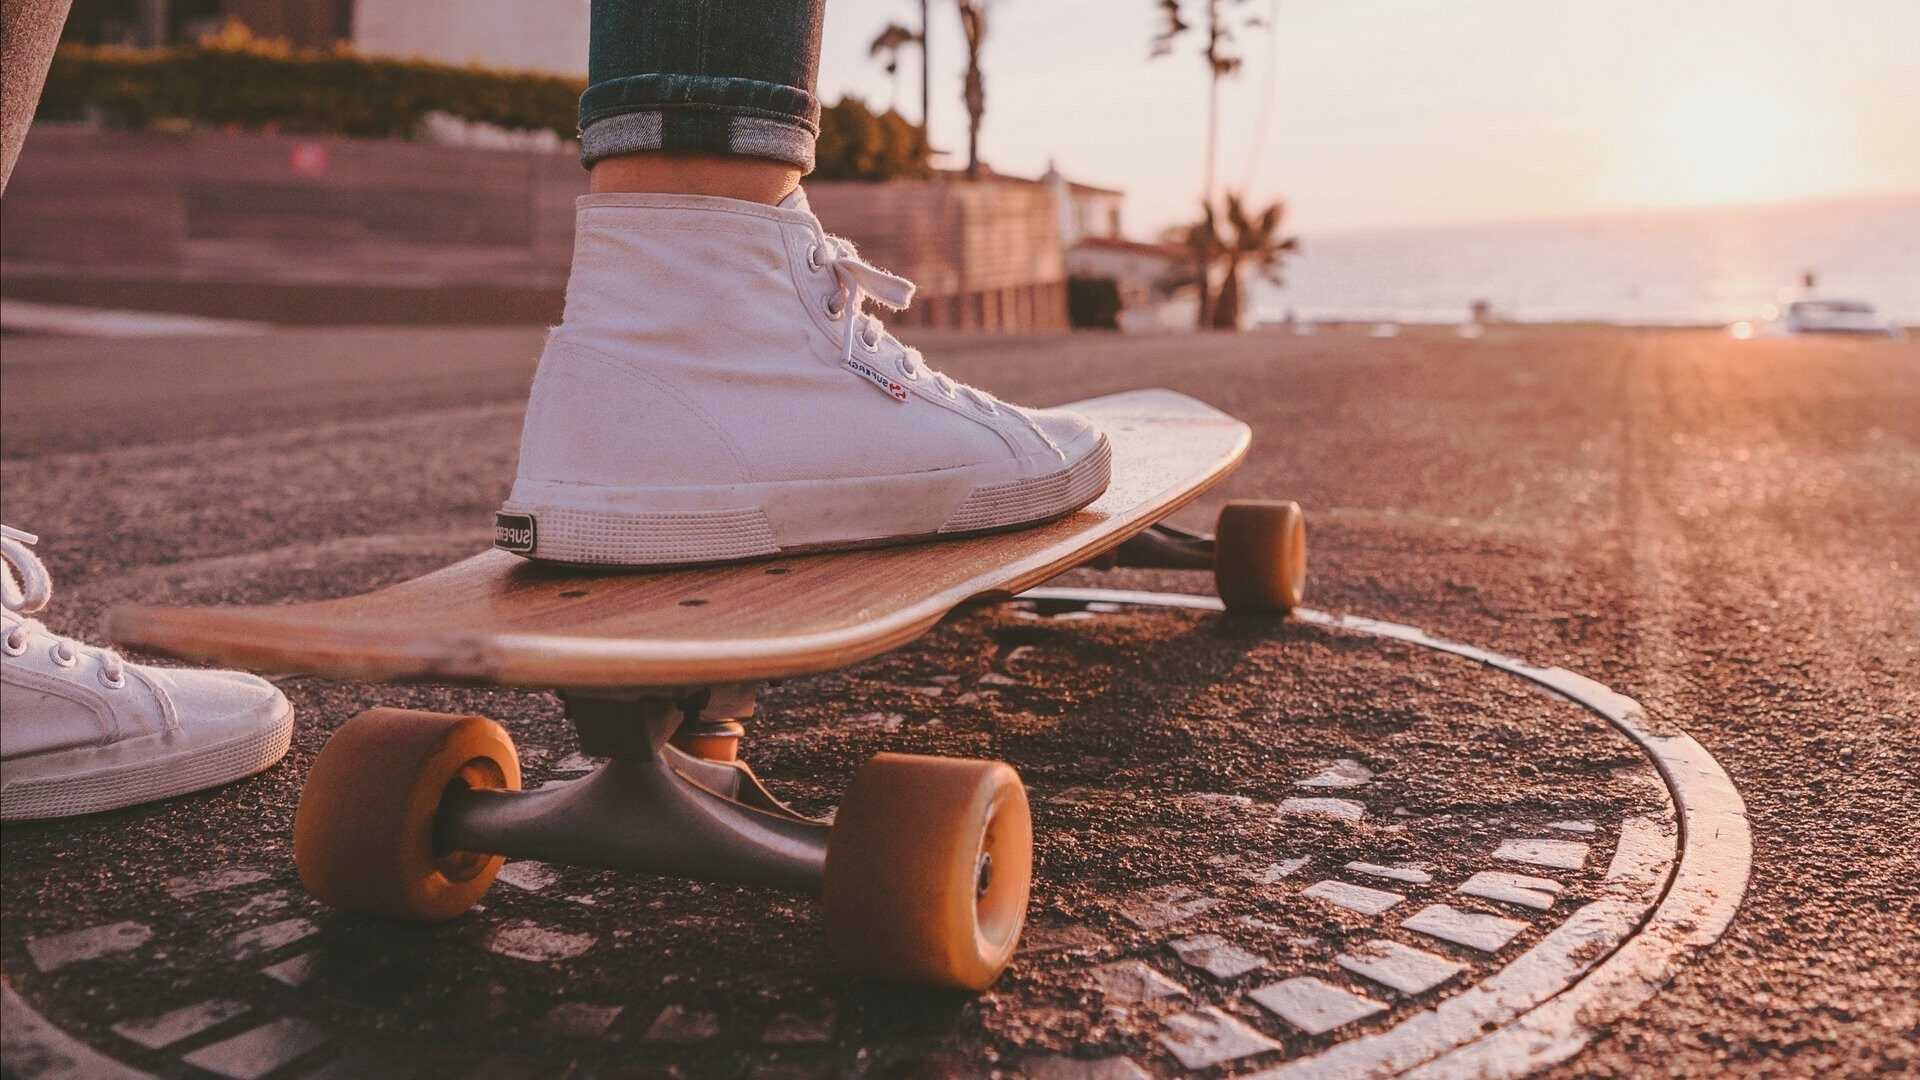 Skateboard Wallpaper - NawPic